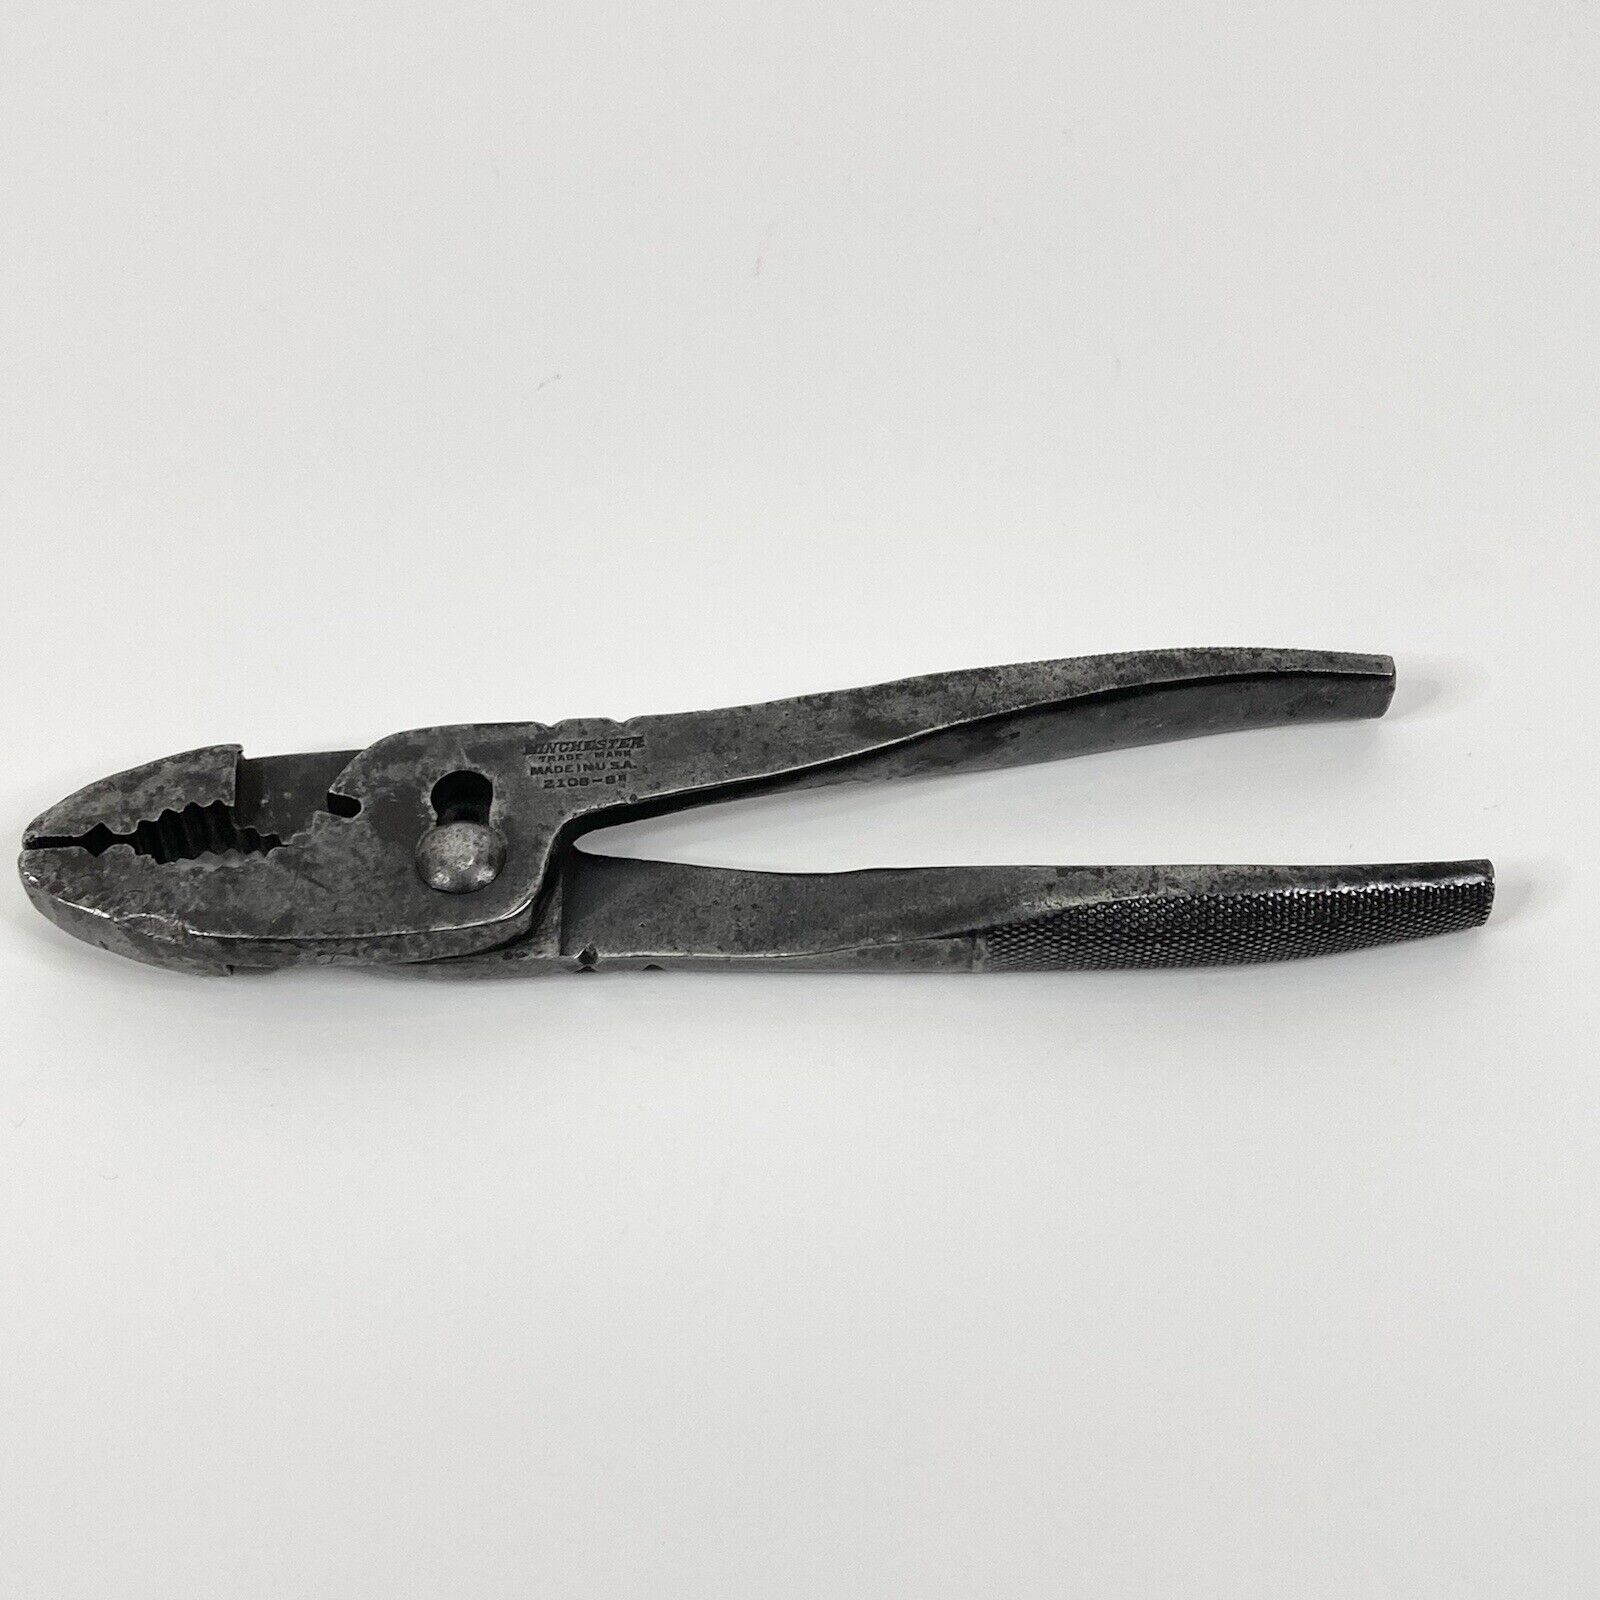 Vintage Winchester Tools 2108 Slip Joint Pliers 8” Very Nice Legible Markings US